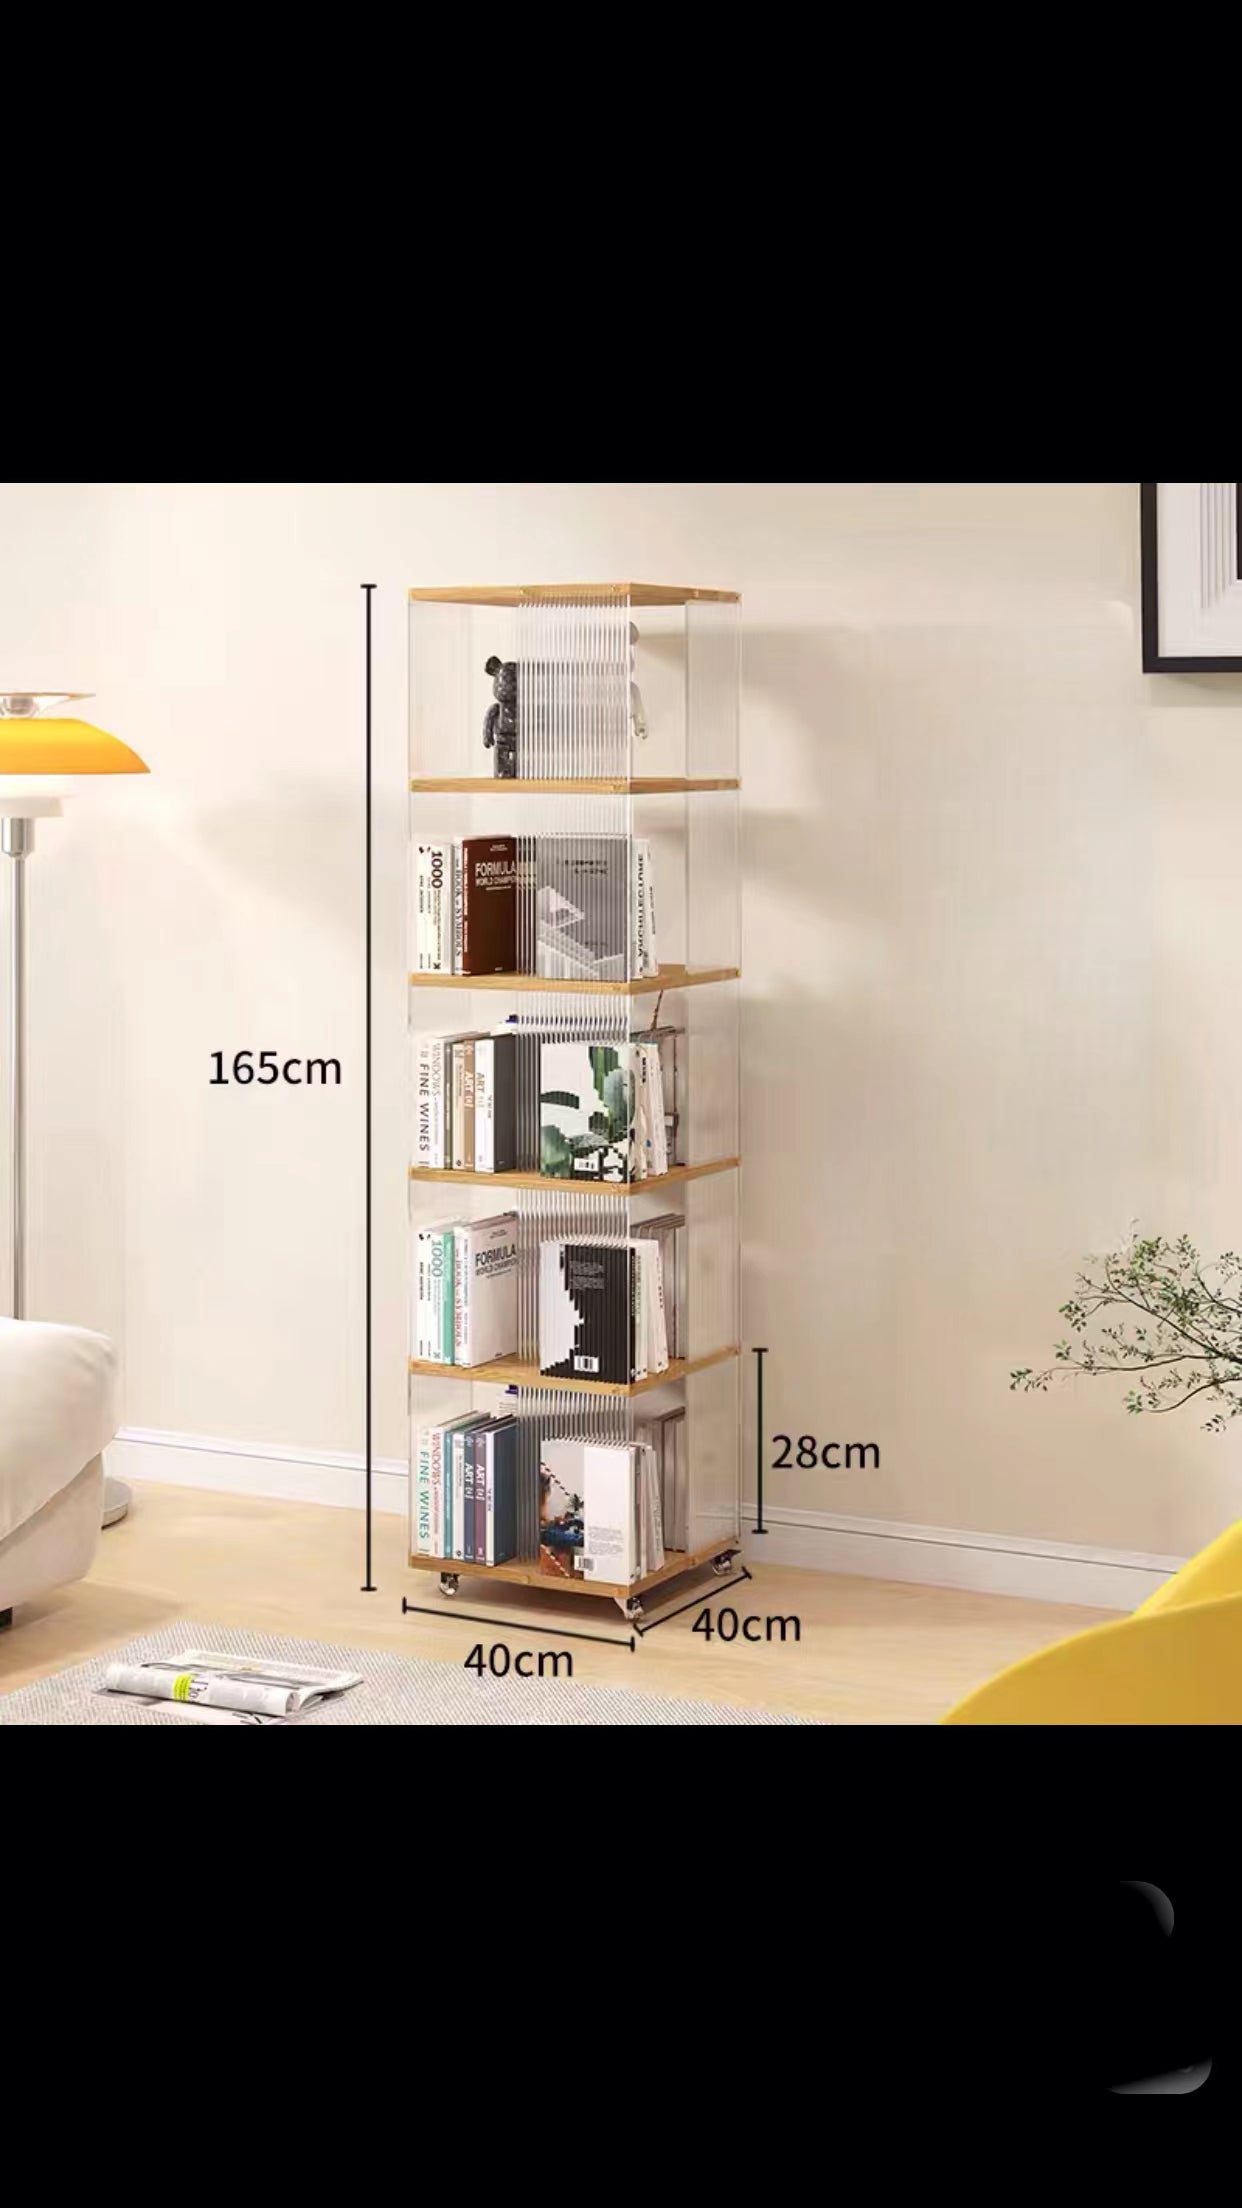 Presto Acrylic Bookcase and Cart - 4 Seasons Home Gadgets